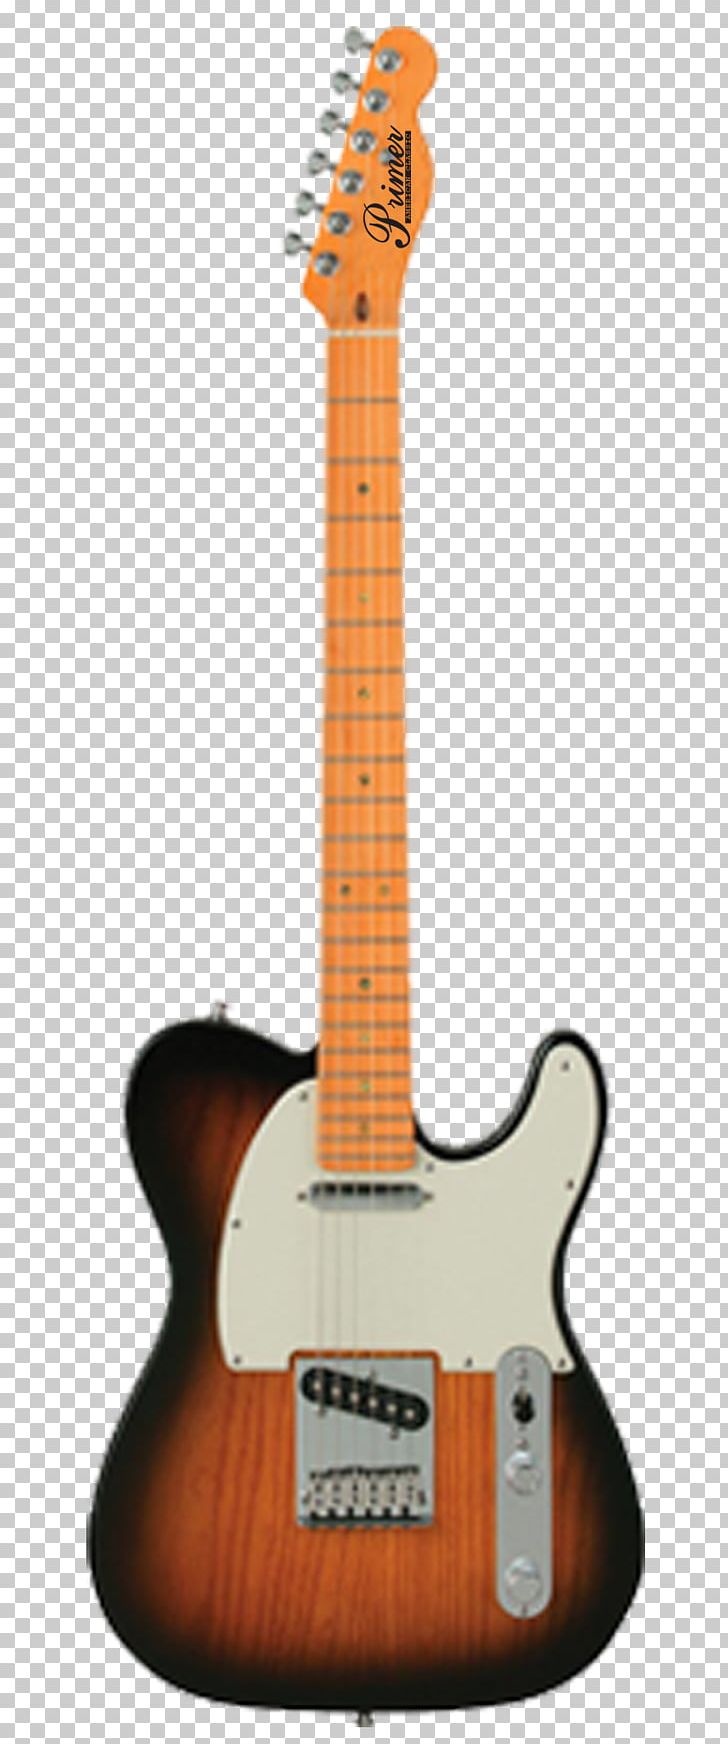 Fender Telecaster Custom Fender Telecaster Thinline Fender Stratocaster Fender Telecaster Deluxe PNG, Clipart, Acoustic Electric Guitar, Cuatro, Guitar, Guitar Accessory, Jazz Guitarist Free PNG Download